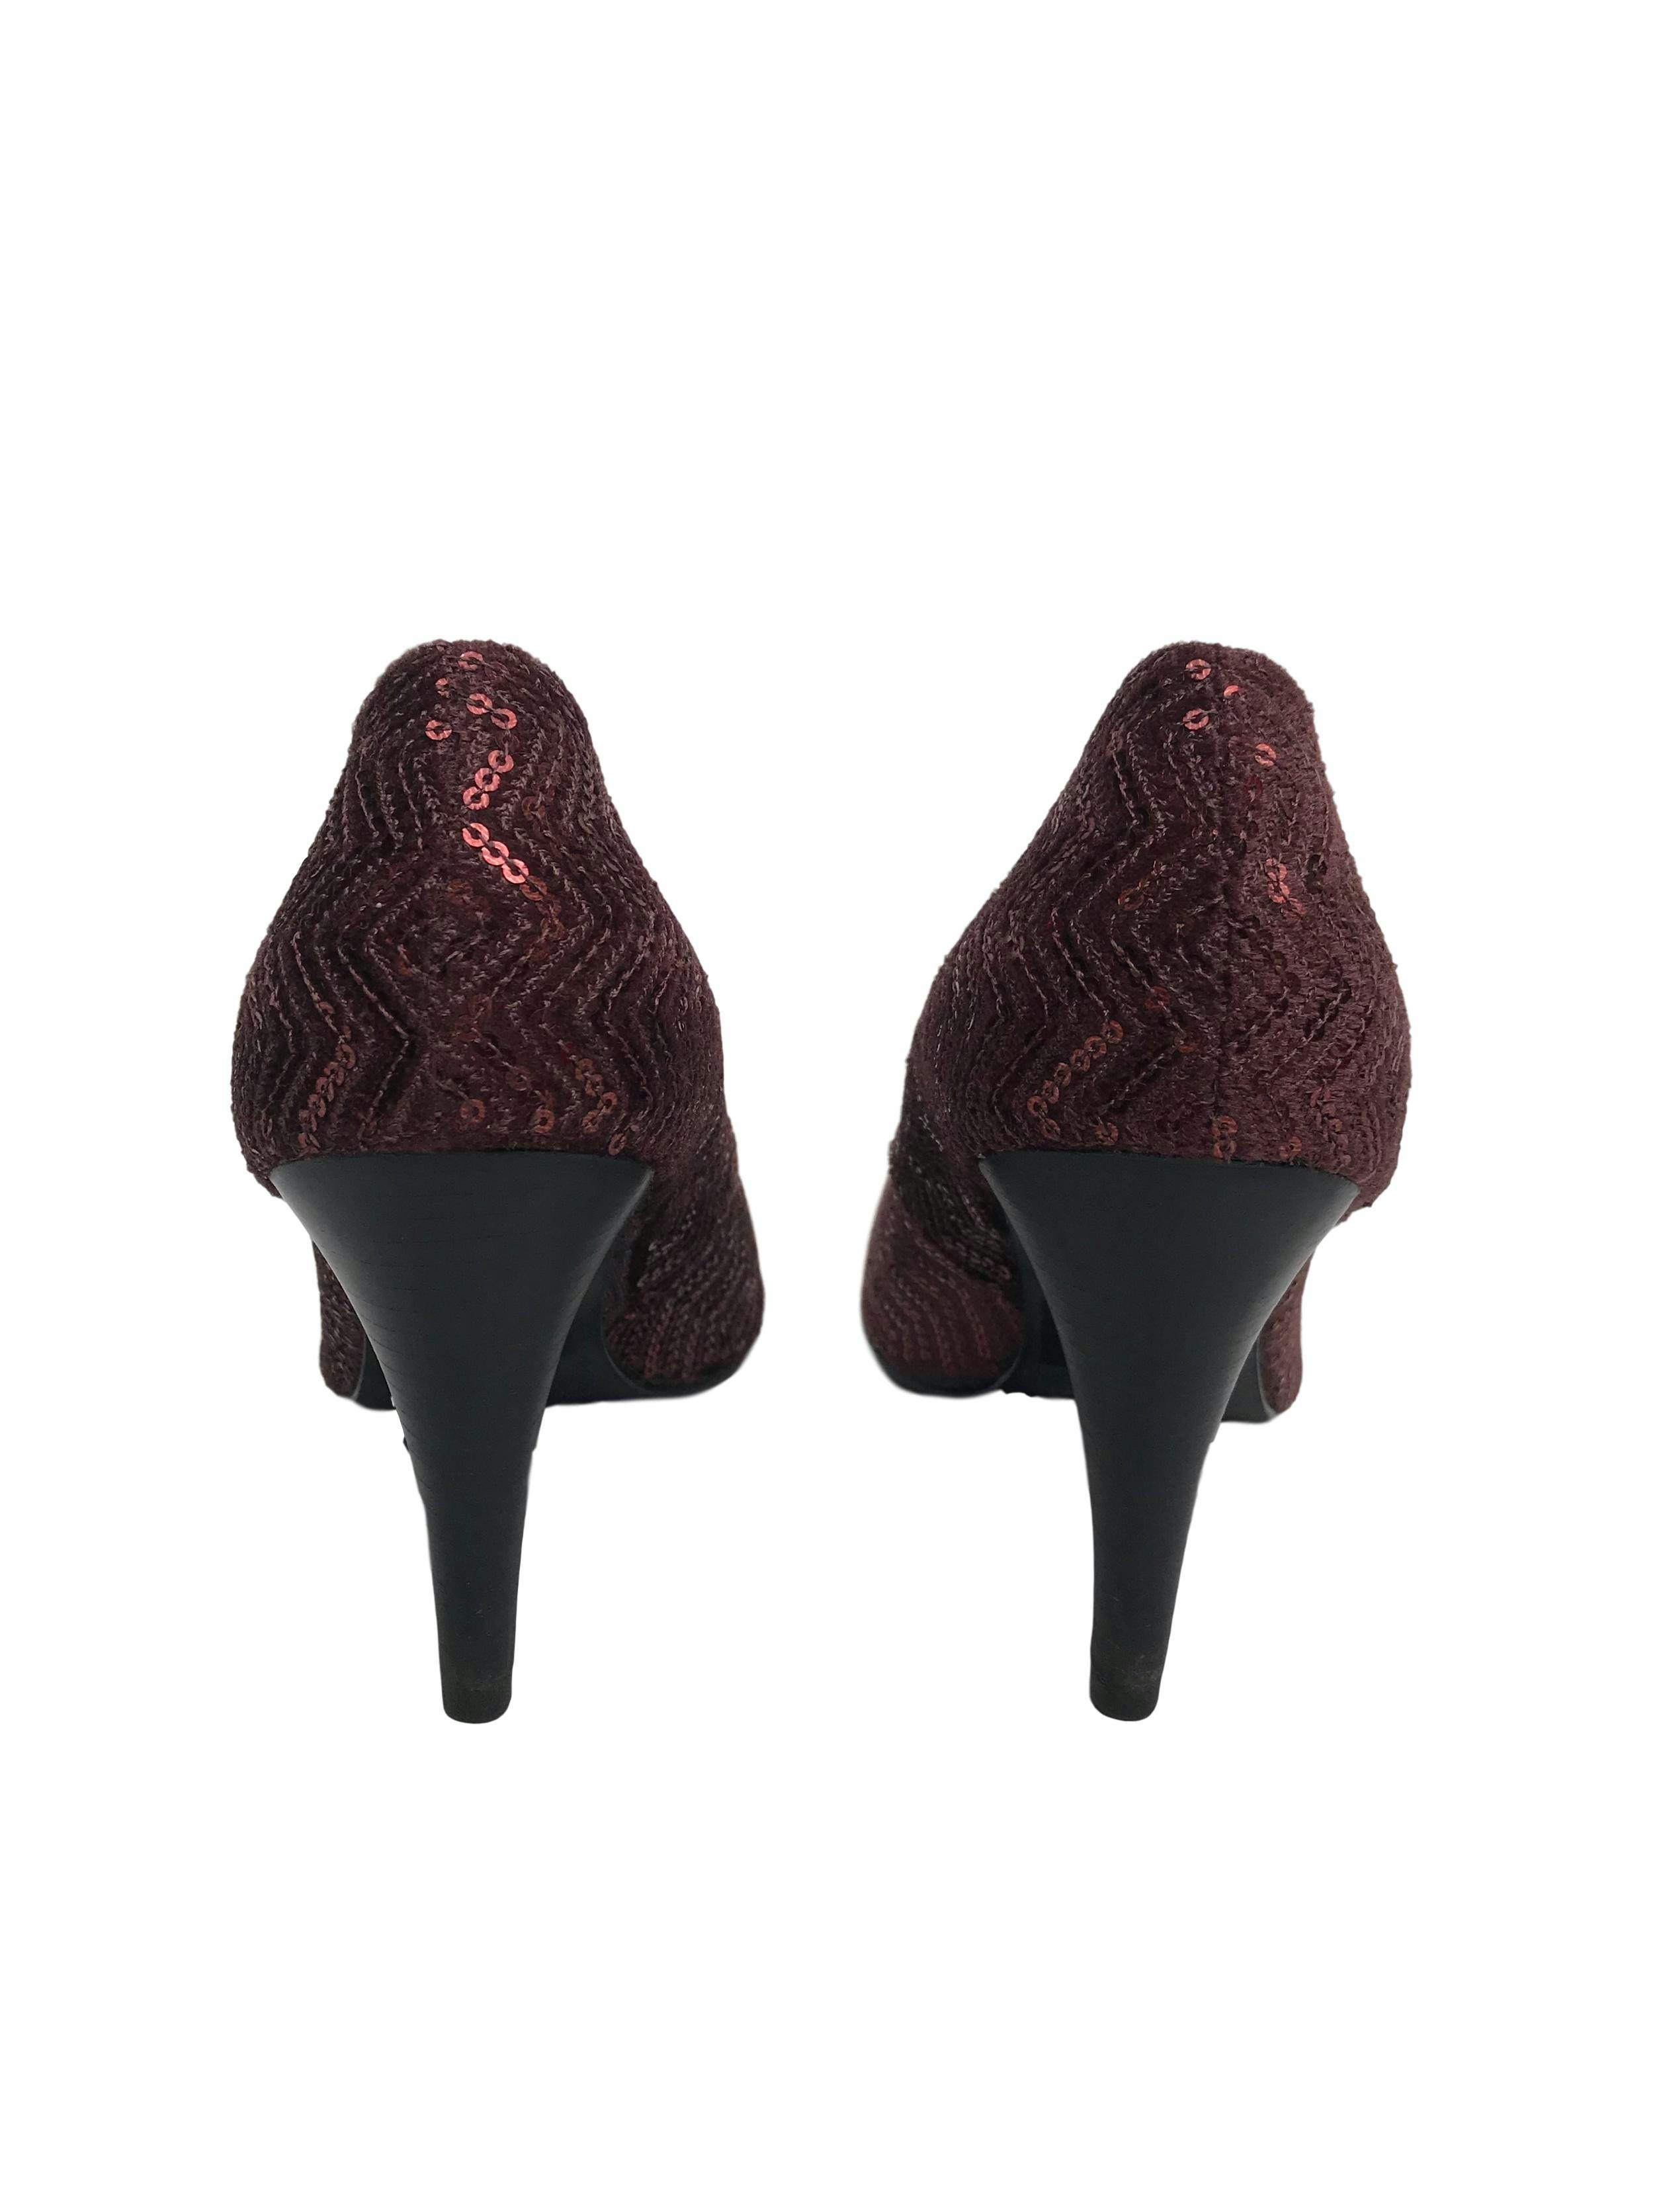 Zapatos Michelle Belau de textil guinda con mostacillas, taco 9cm. Estado 9/10